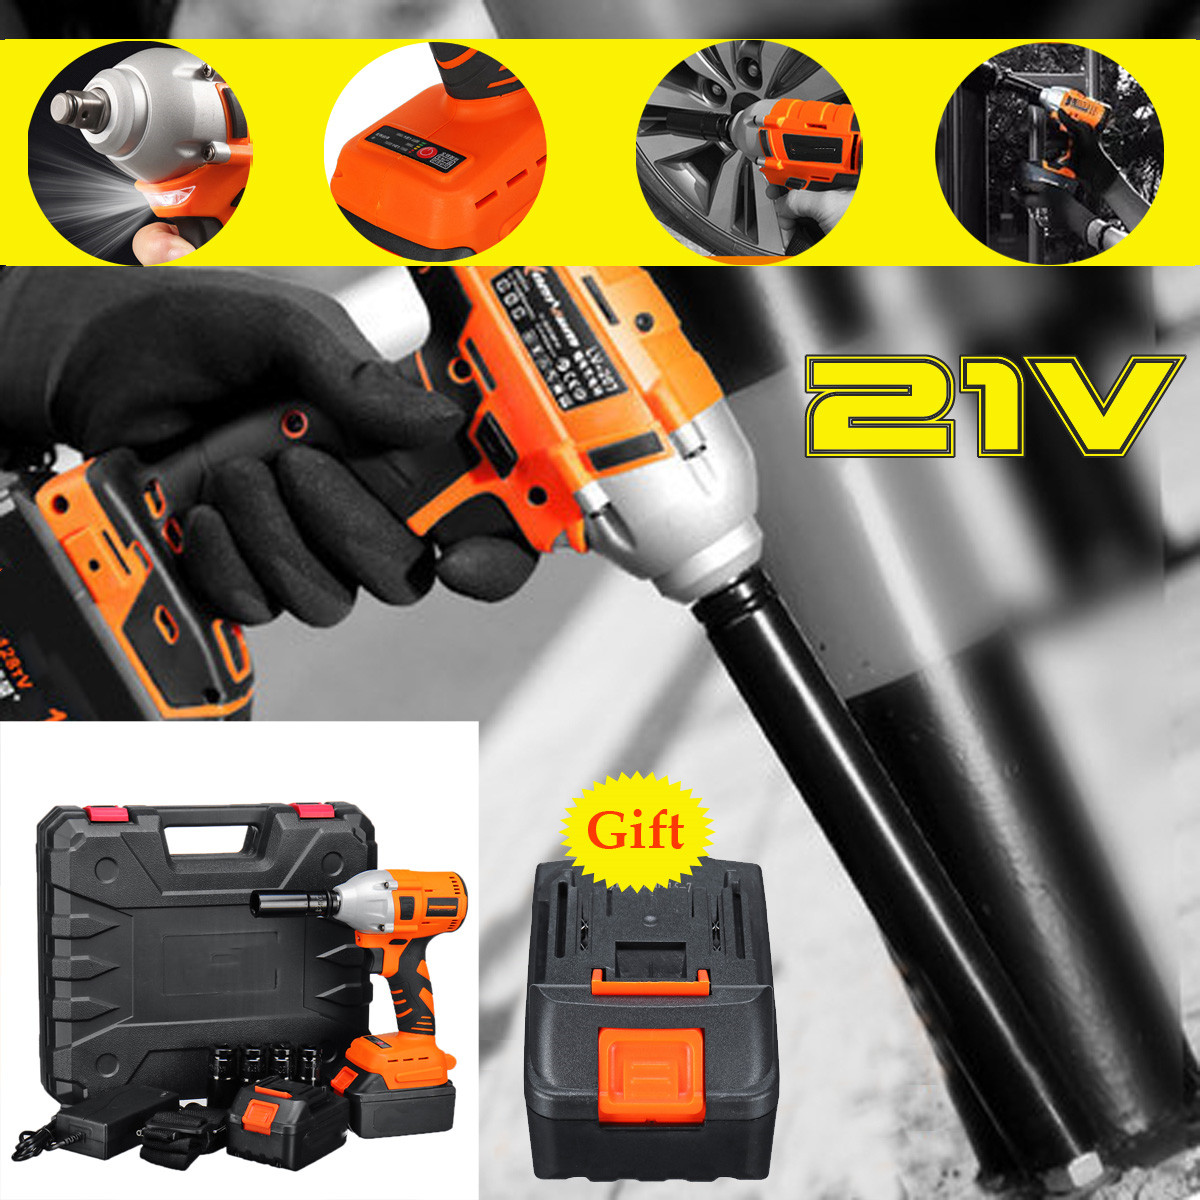 21V-16000mAh-Brushless-Impact-Wrench-LED-Light-Li-Ion-Battery-Cordless-Electric-Impact-Wrench-1397275-3